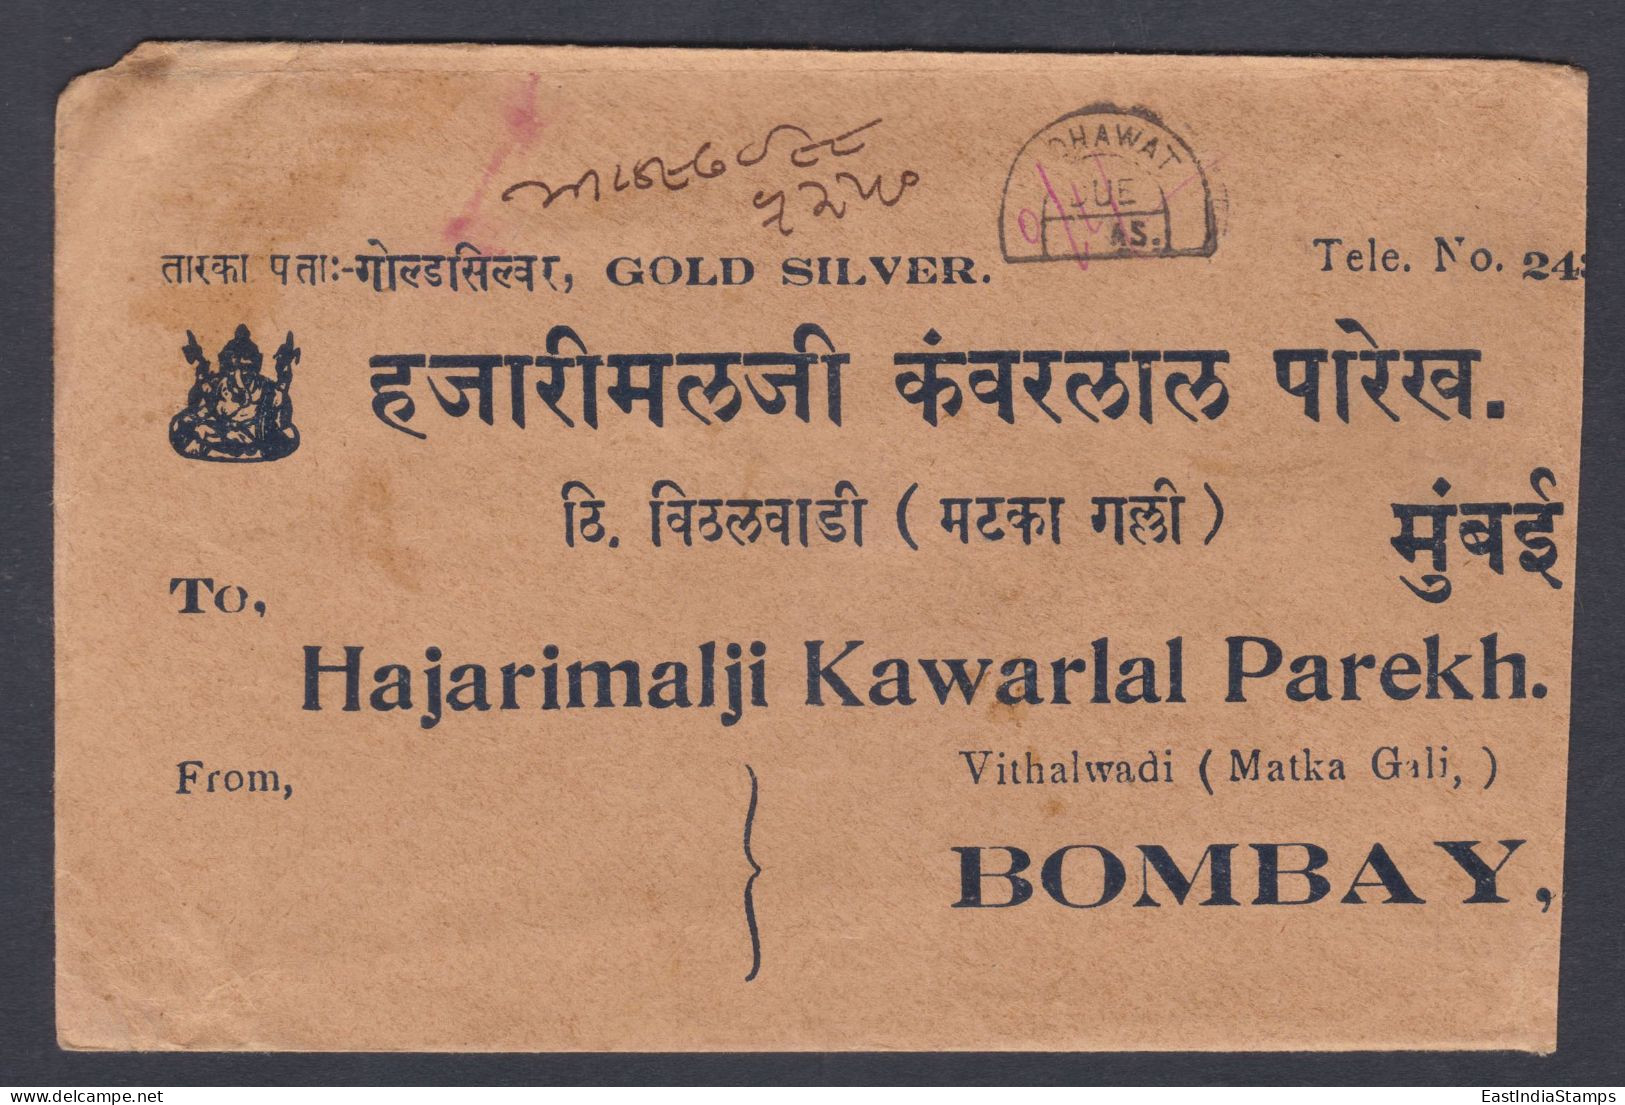 Inde British India 1931 Used Postage Due Cover, To Bombay, King George V Stamp - 1911-35 Koning George V